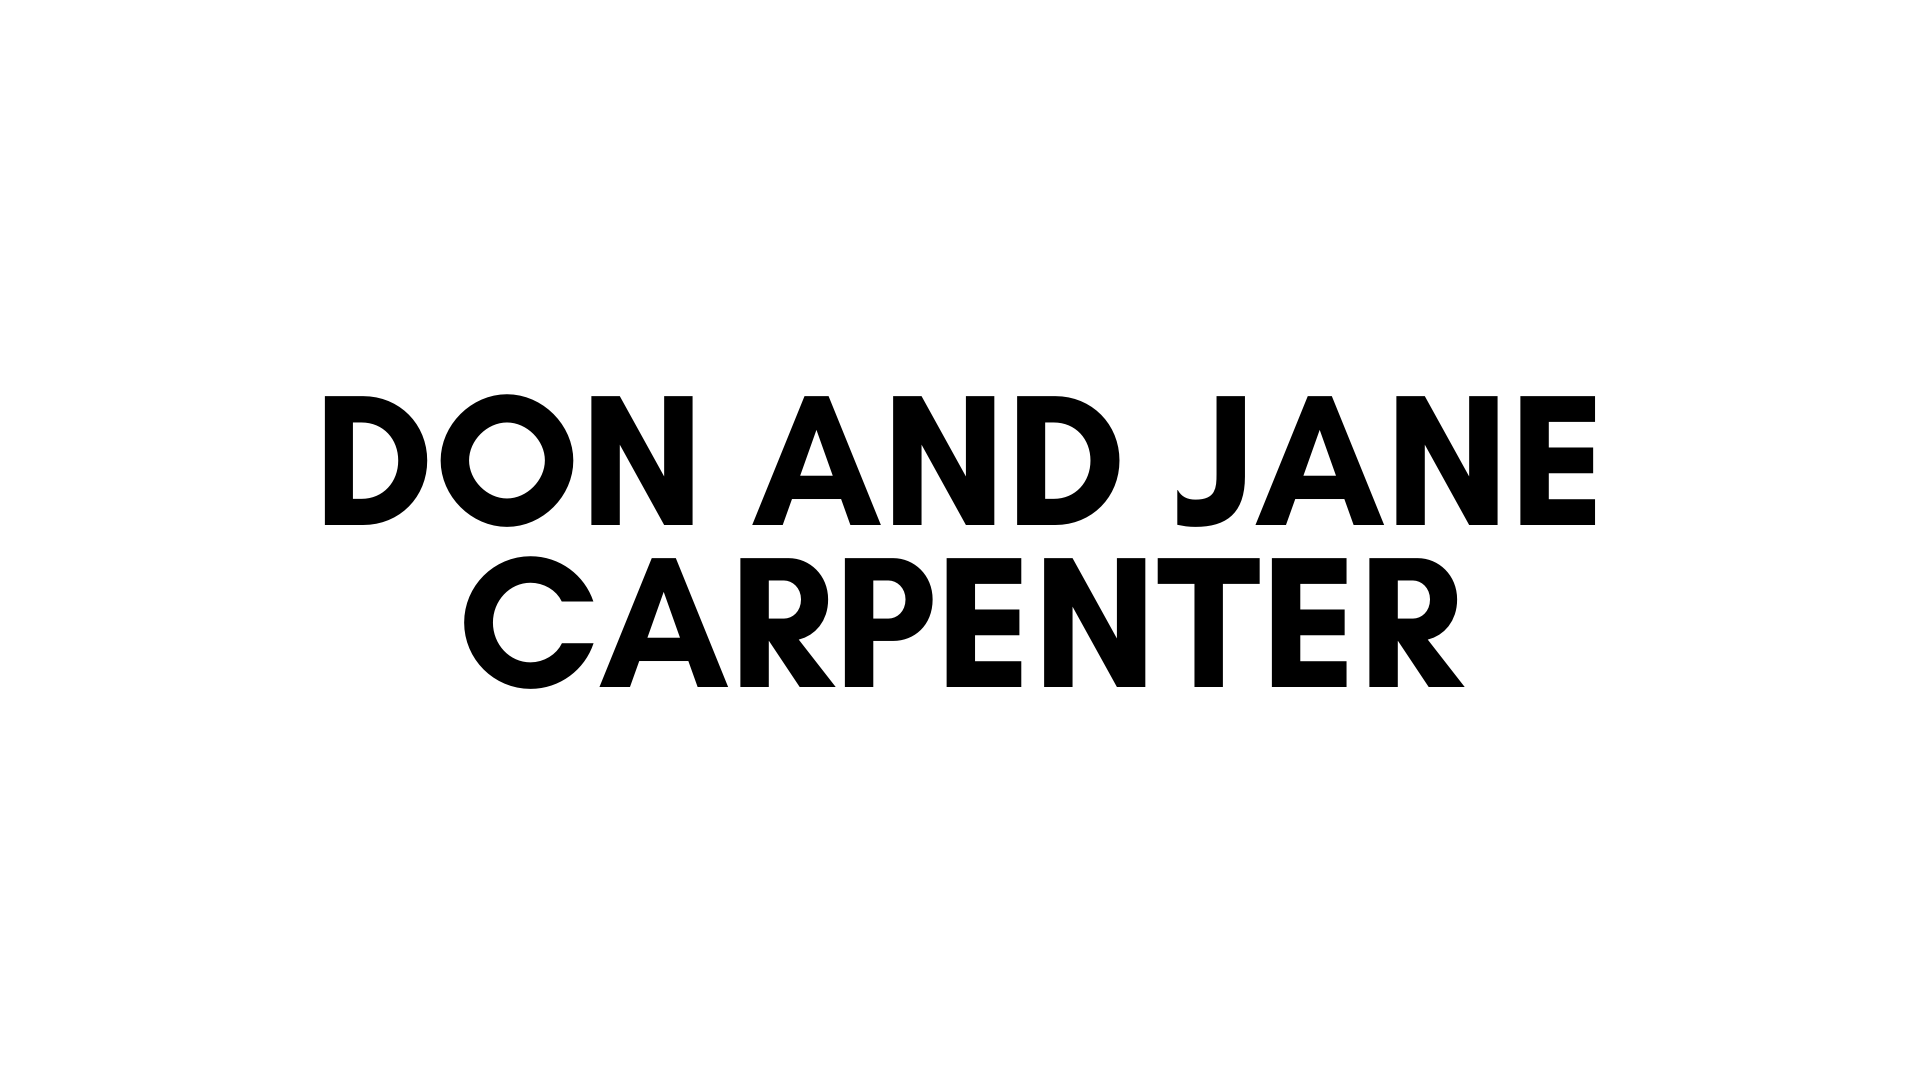 DON AND JANE CARPENTER